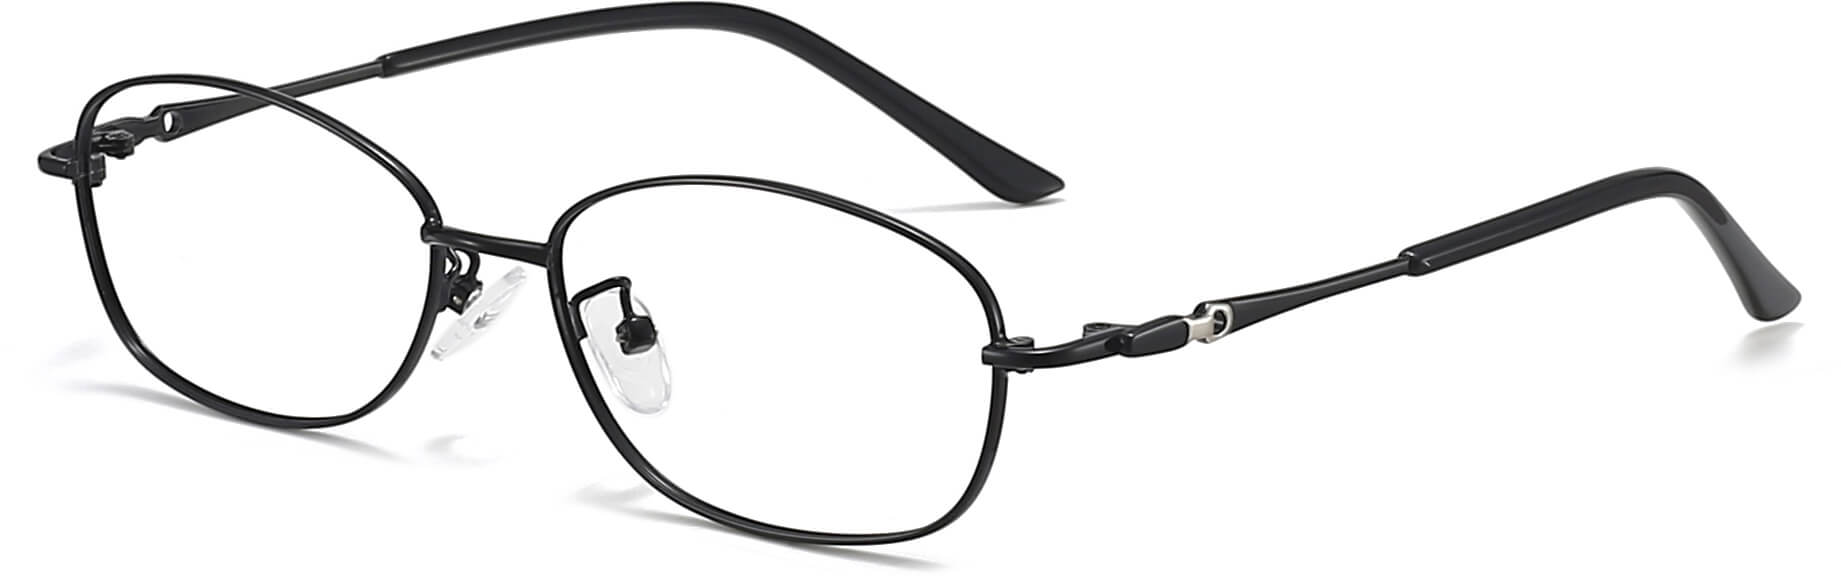 Kallie Round Black Eyeglasses from ANRRI, angle view